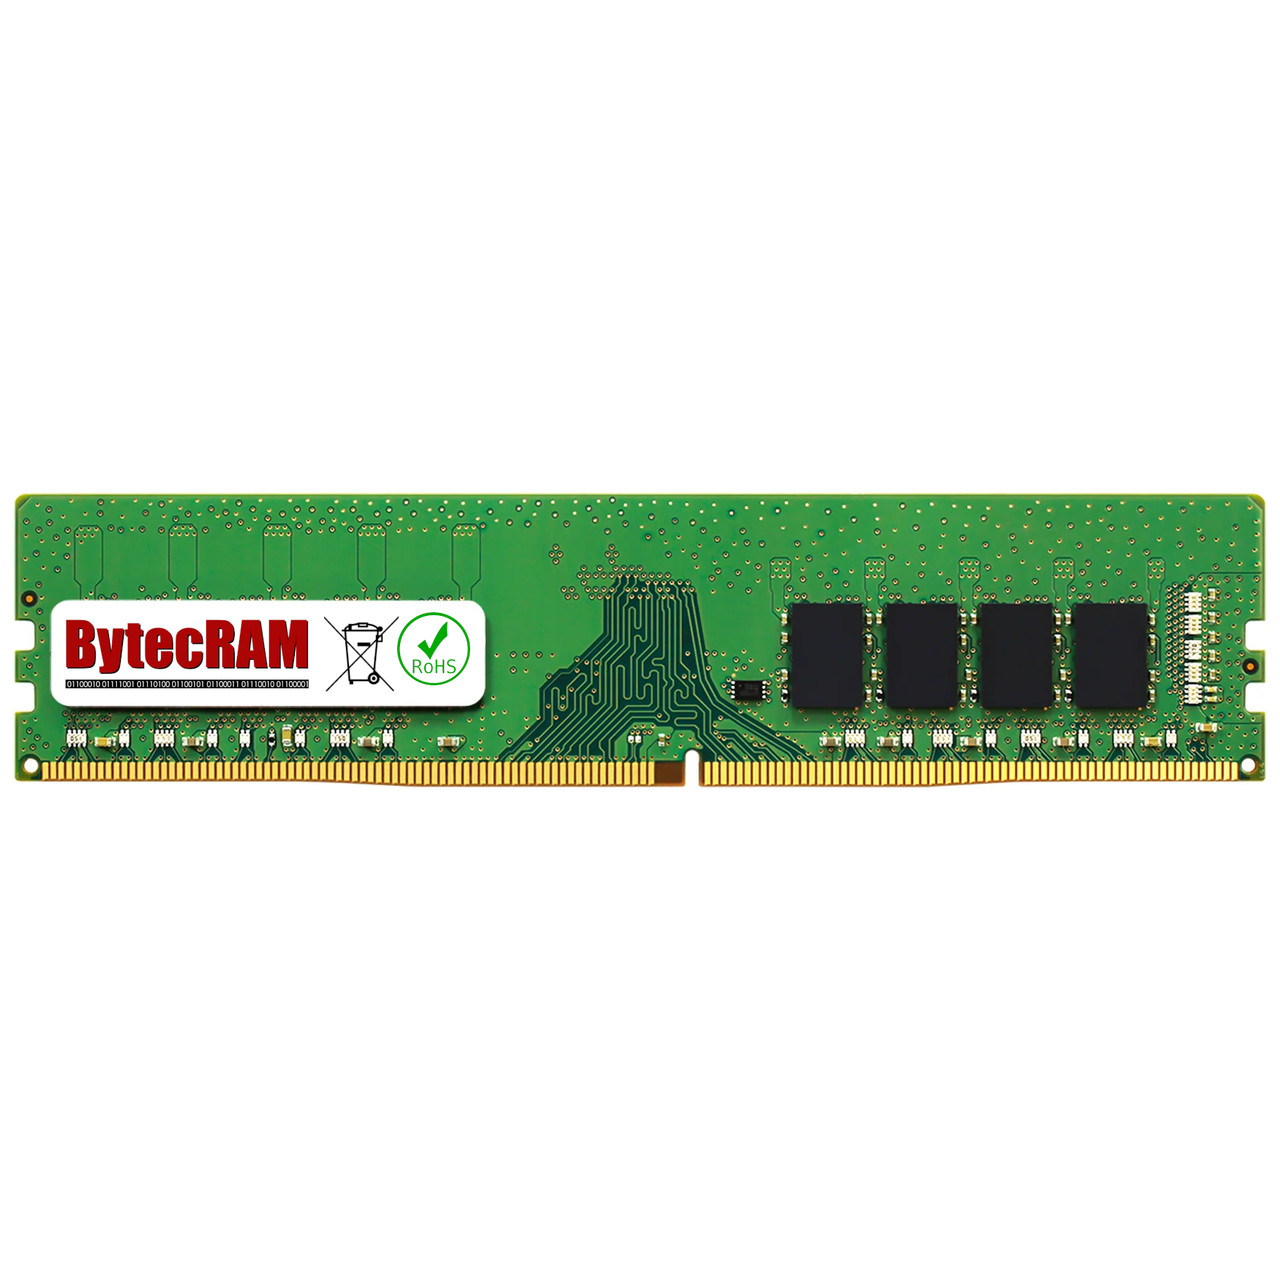 eBay*16GB Lenovo ThinkCentre V530 15ARR 10Y3 DDR4 2666MHz UDIMM Memory RAM Upgrade